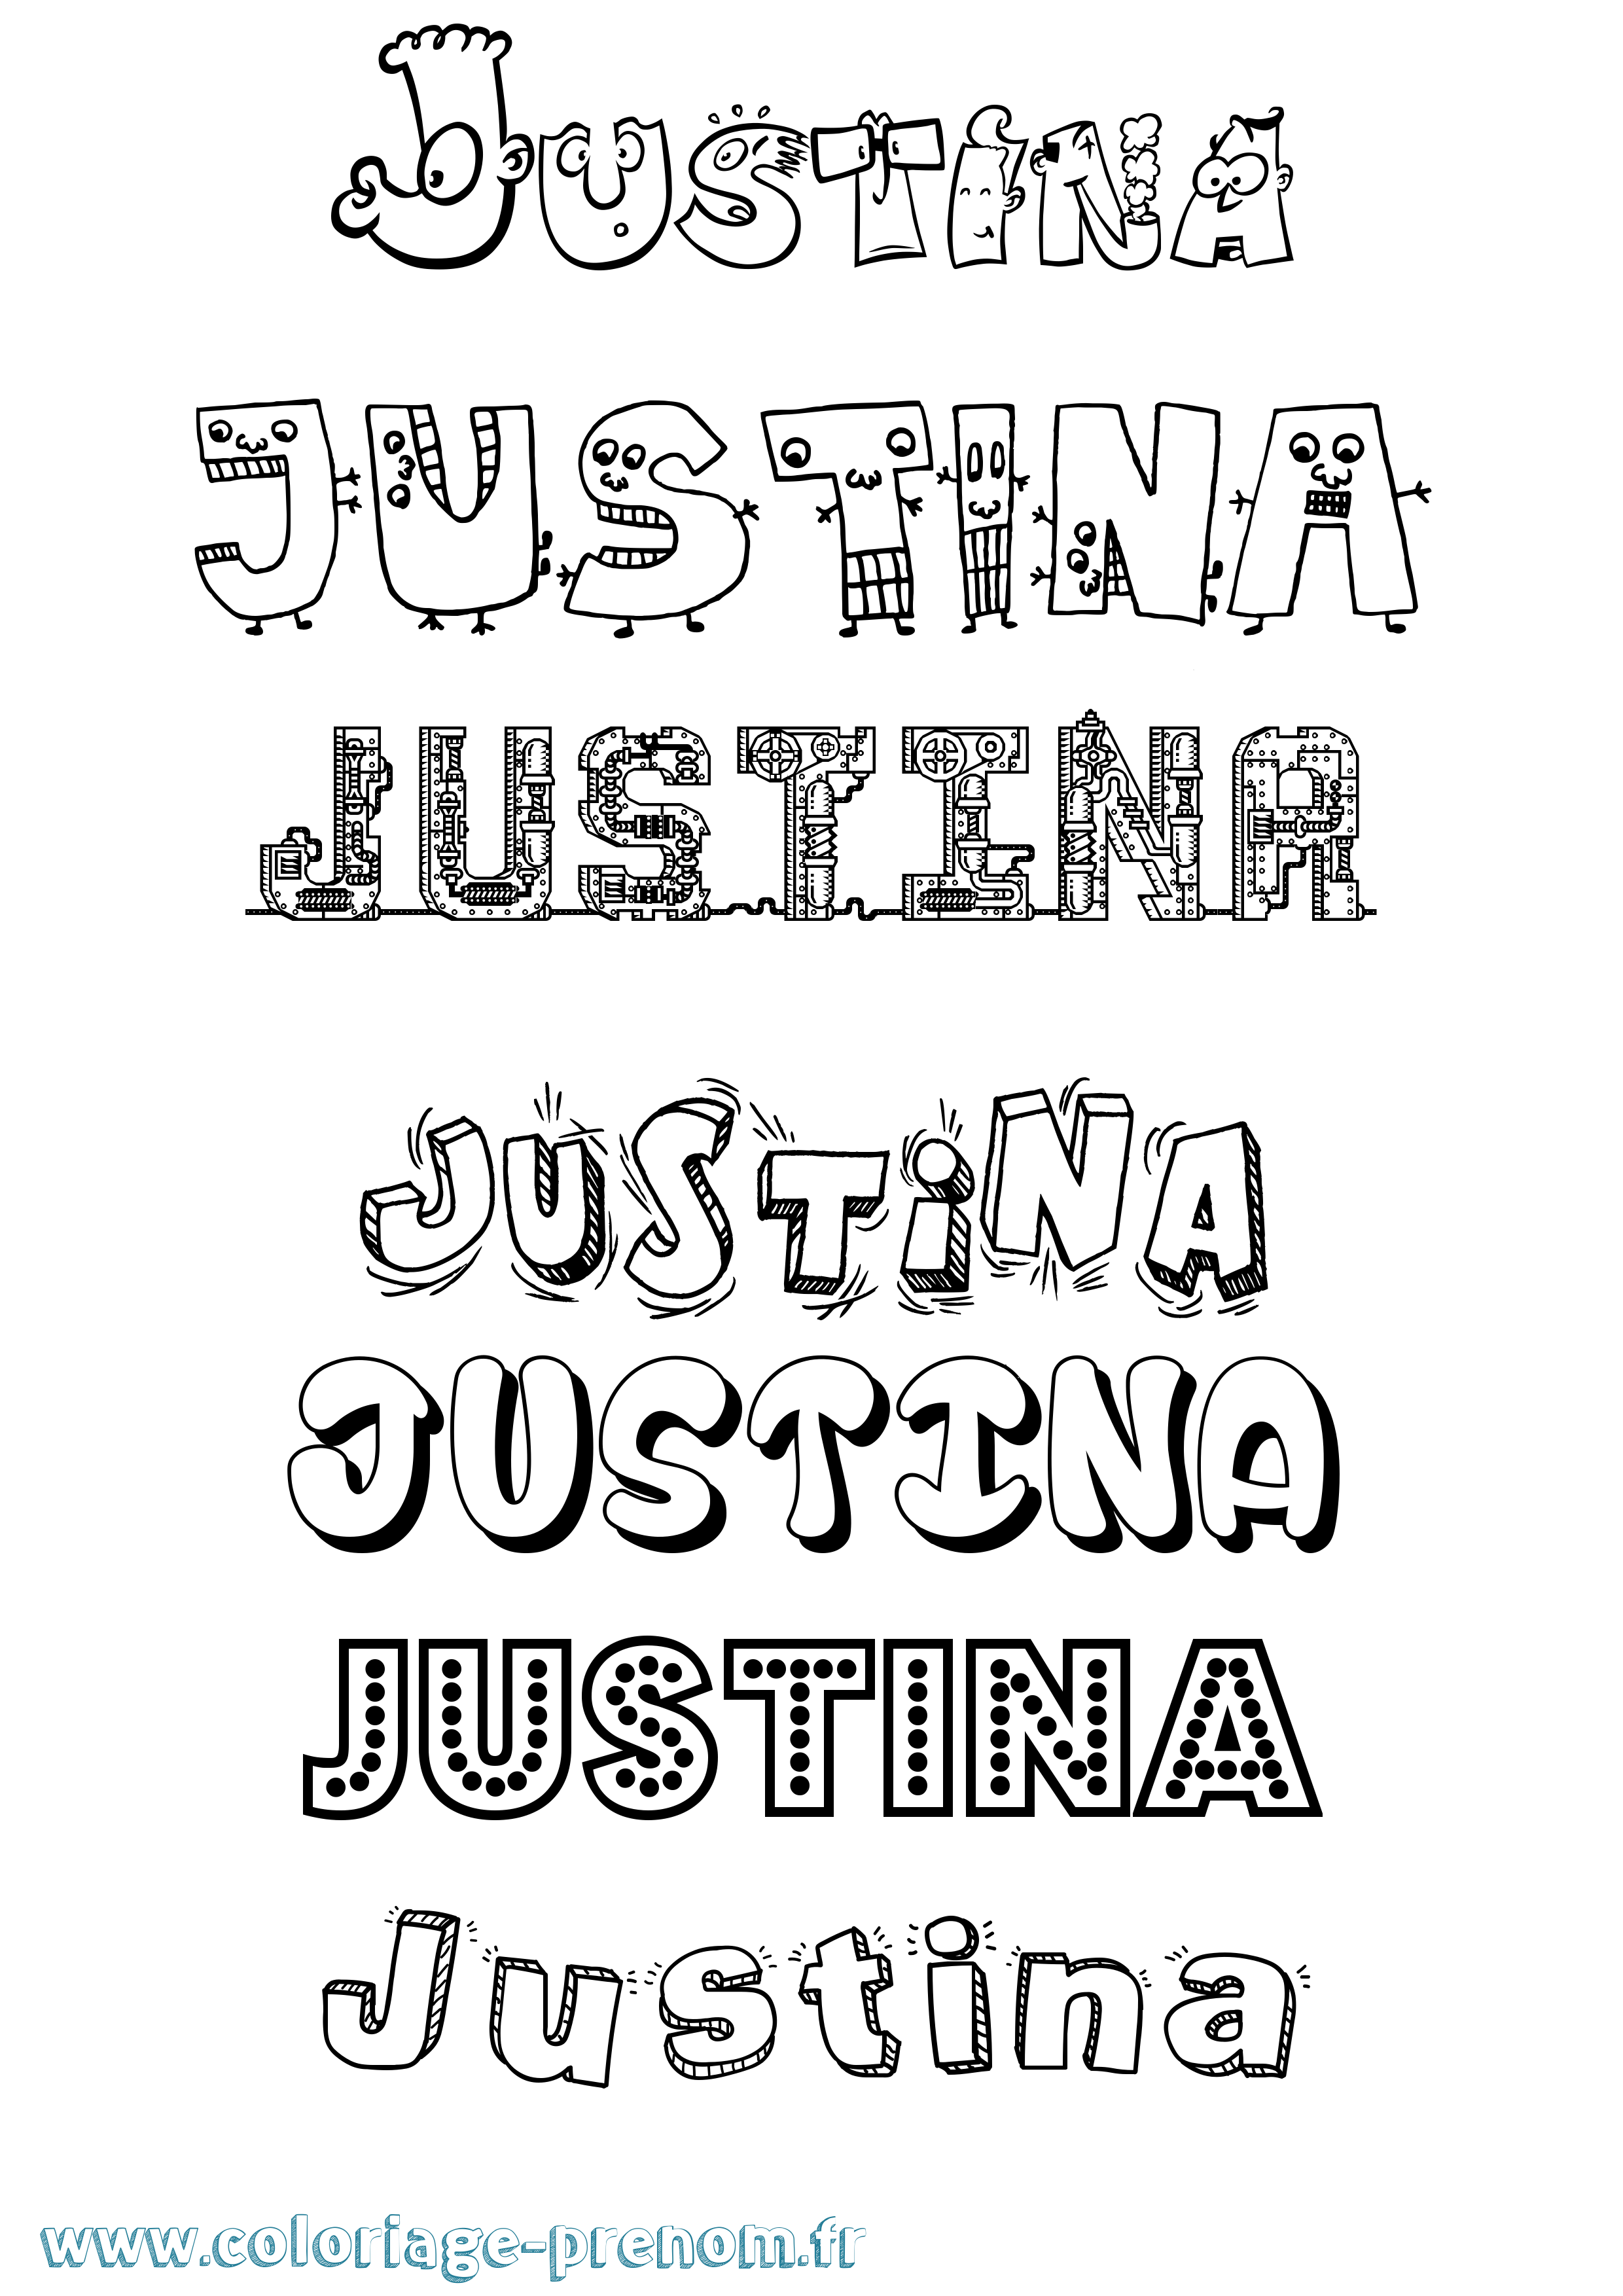 Coloriage prénom Justina Fun